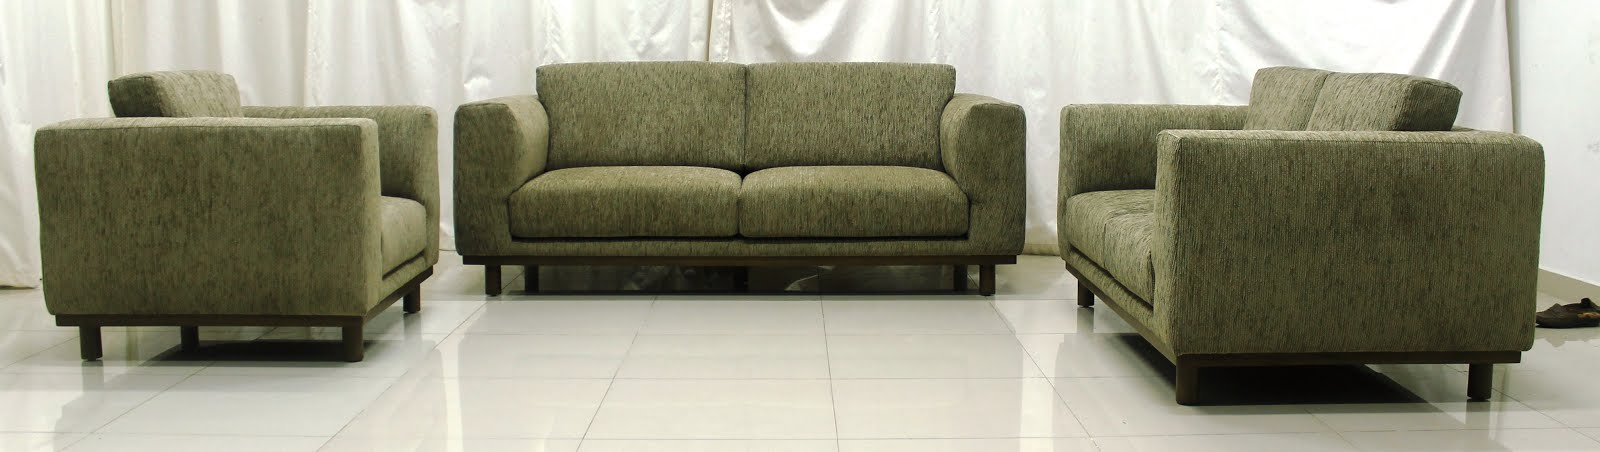 sofa dynamic